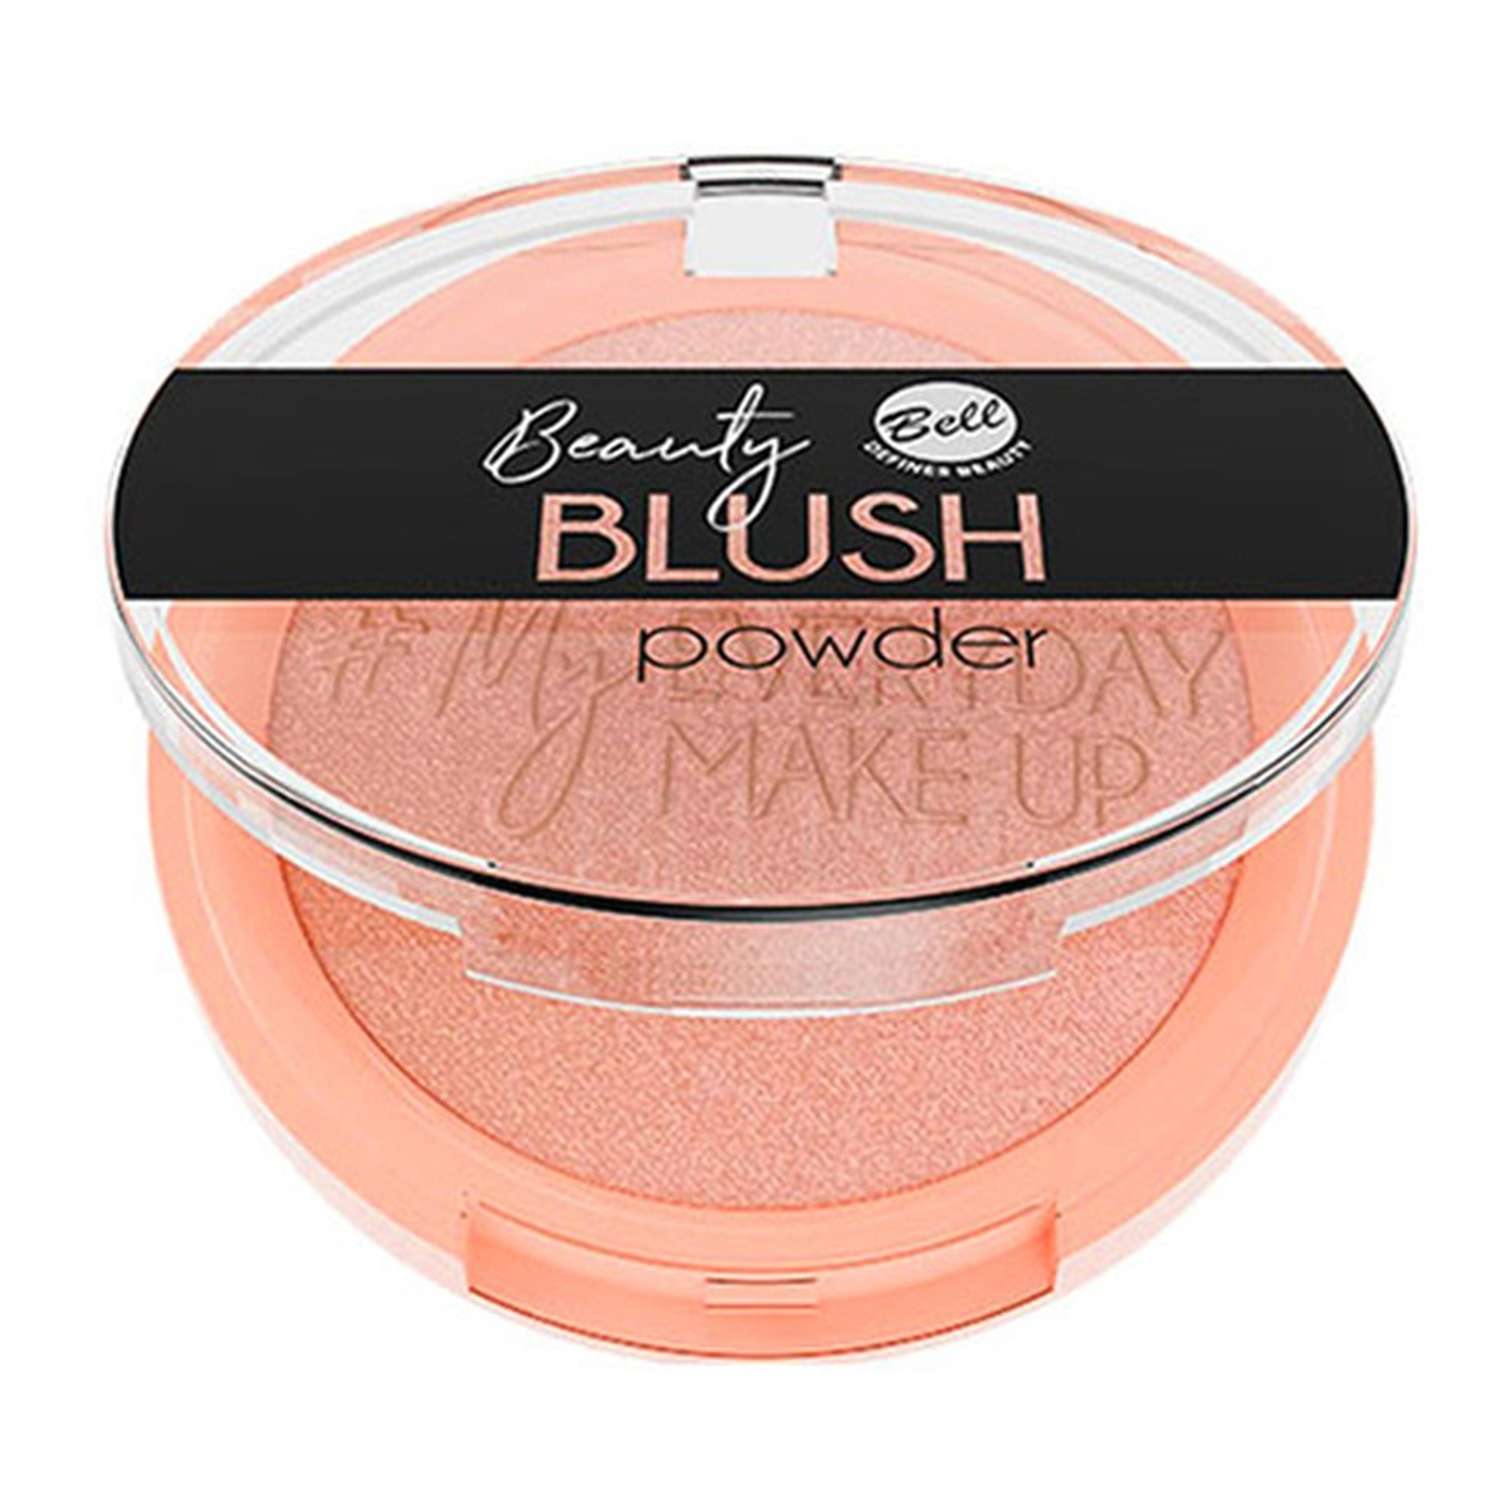 Румяна Bell компактные Beauty blush powder тон 03 - фото 2